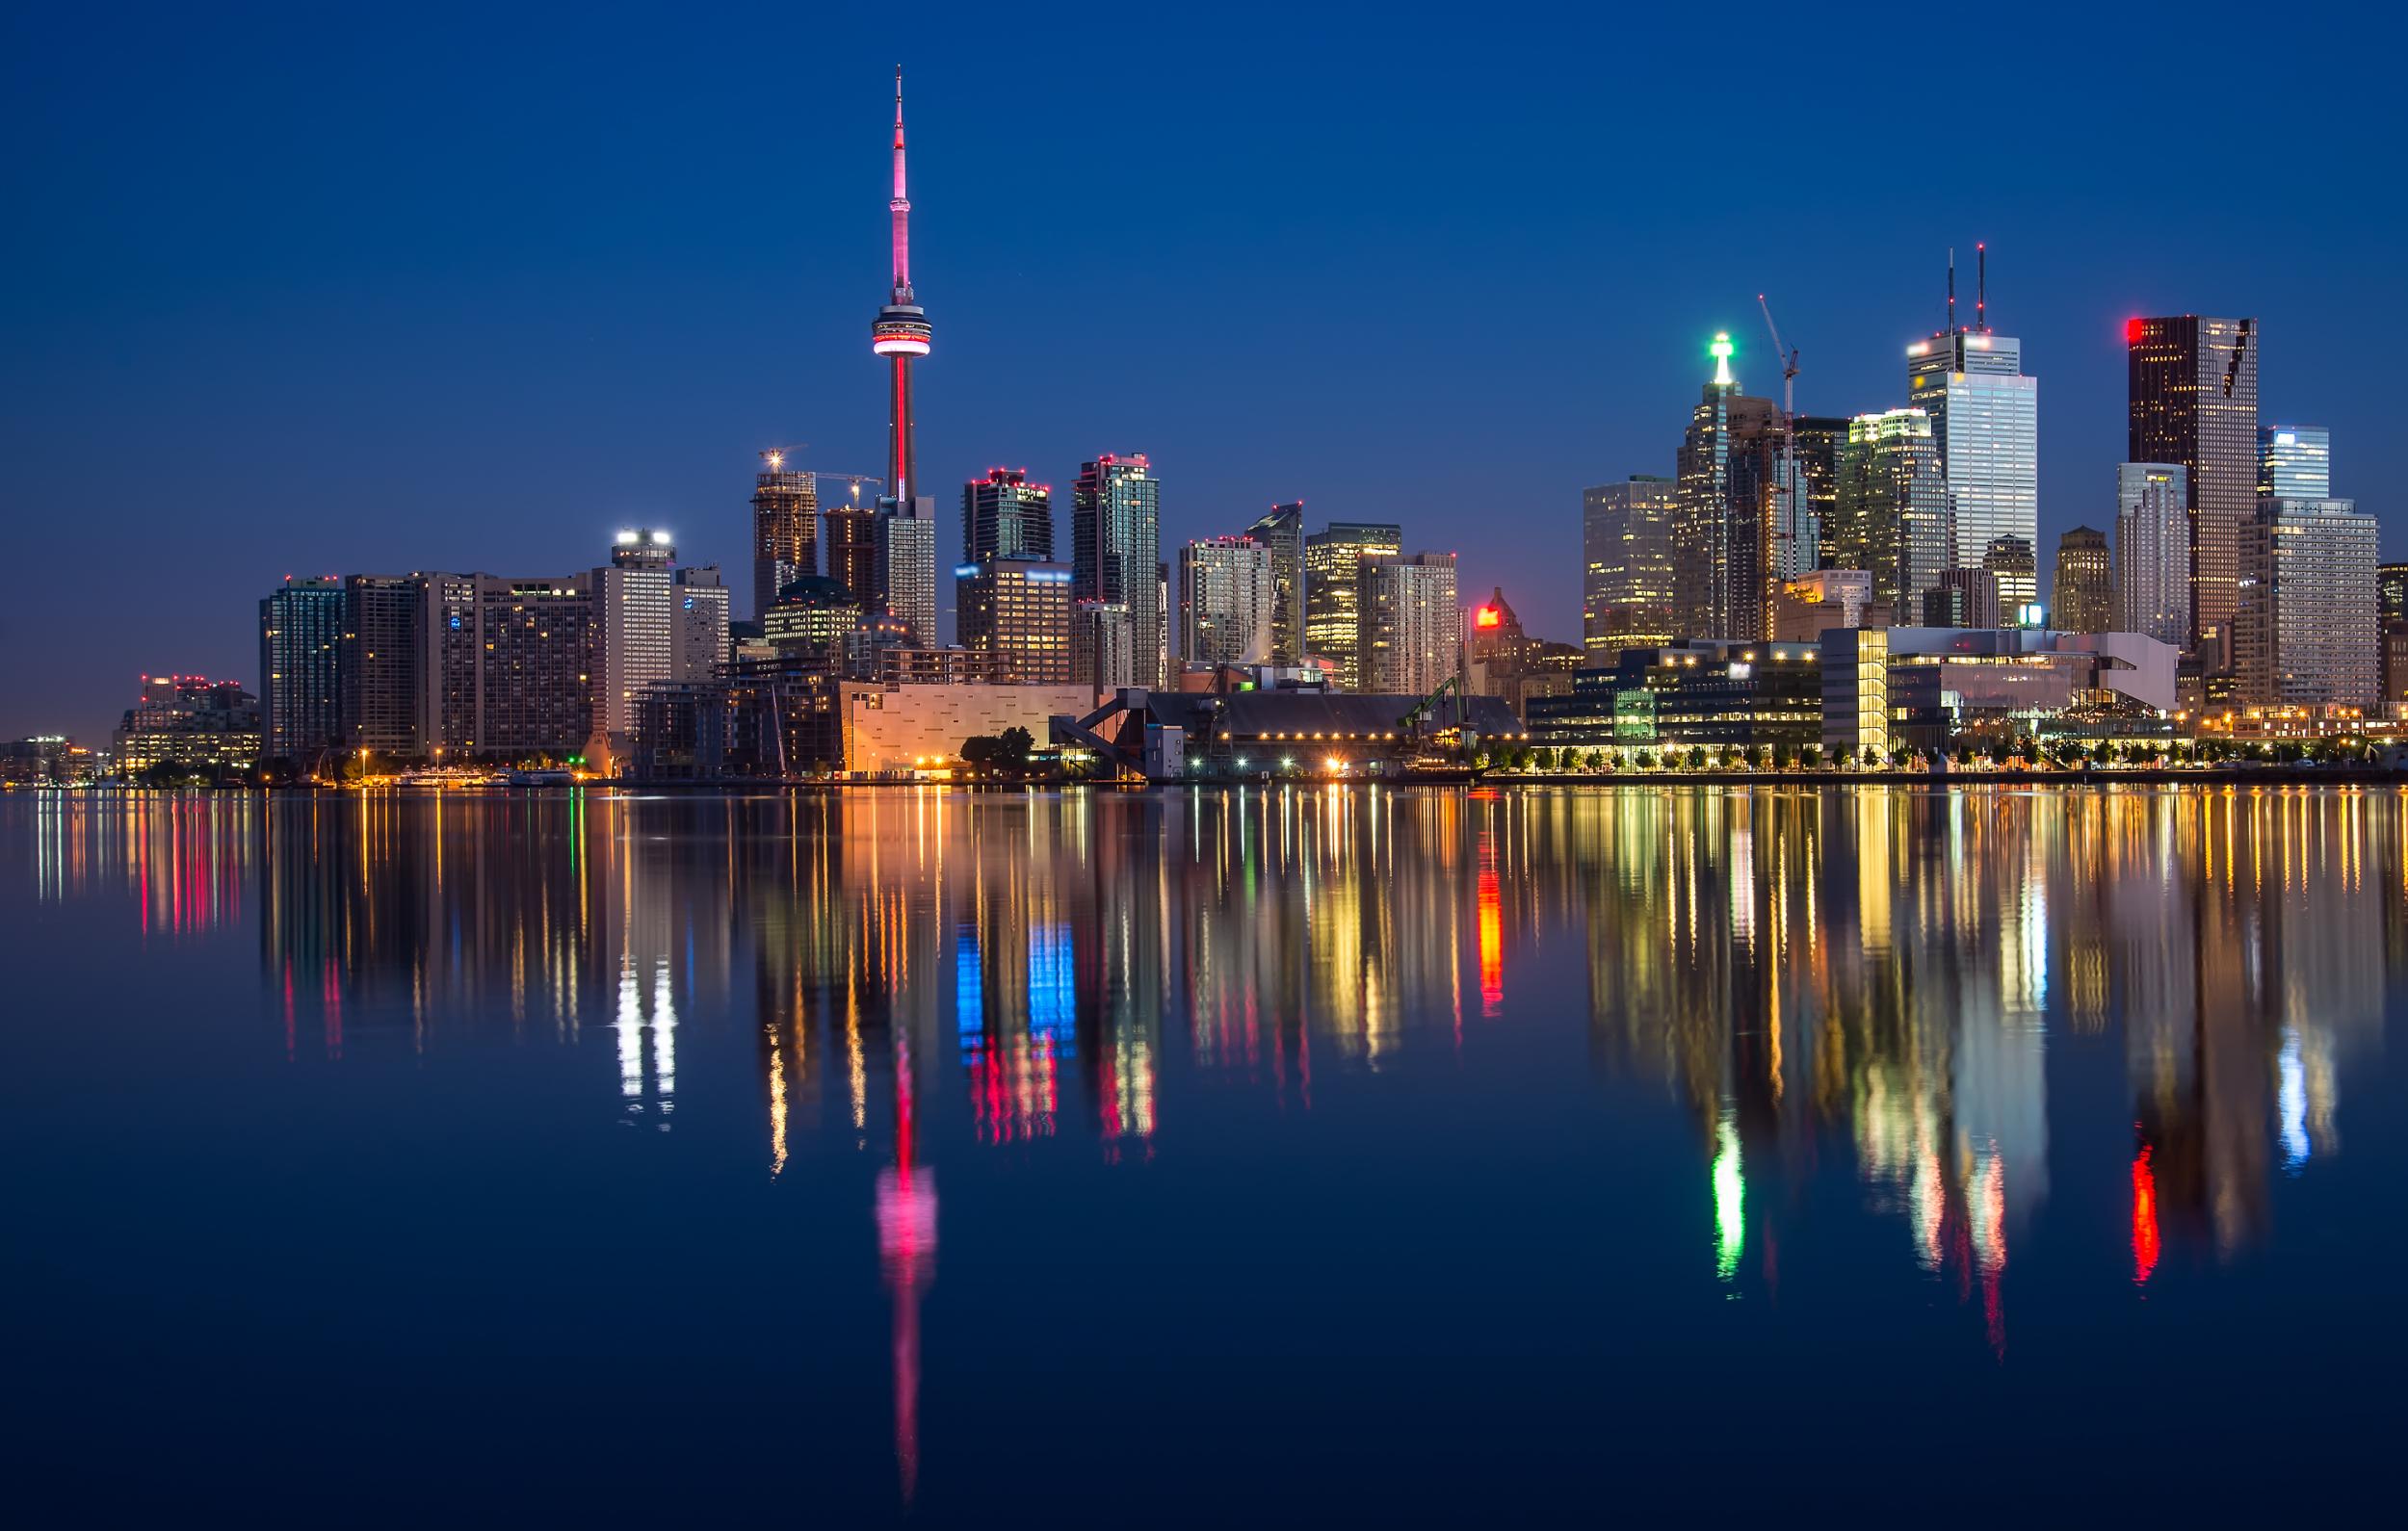 Hire The Best Dubai Immigration Consulting Team For Expedited Canada PR Visas